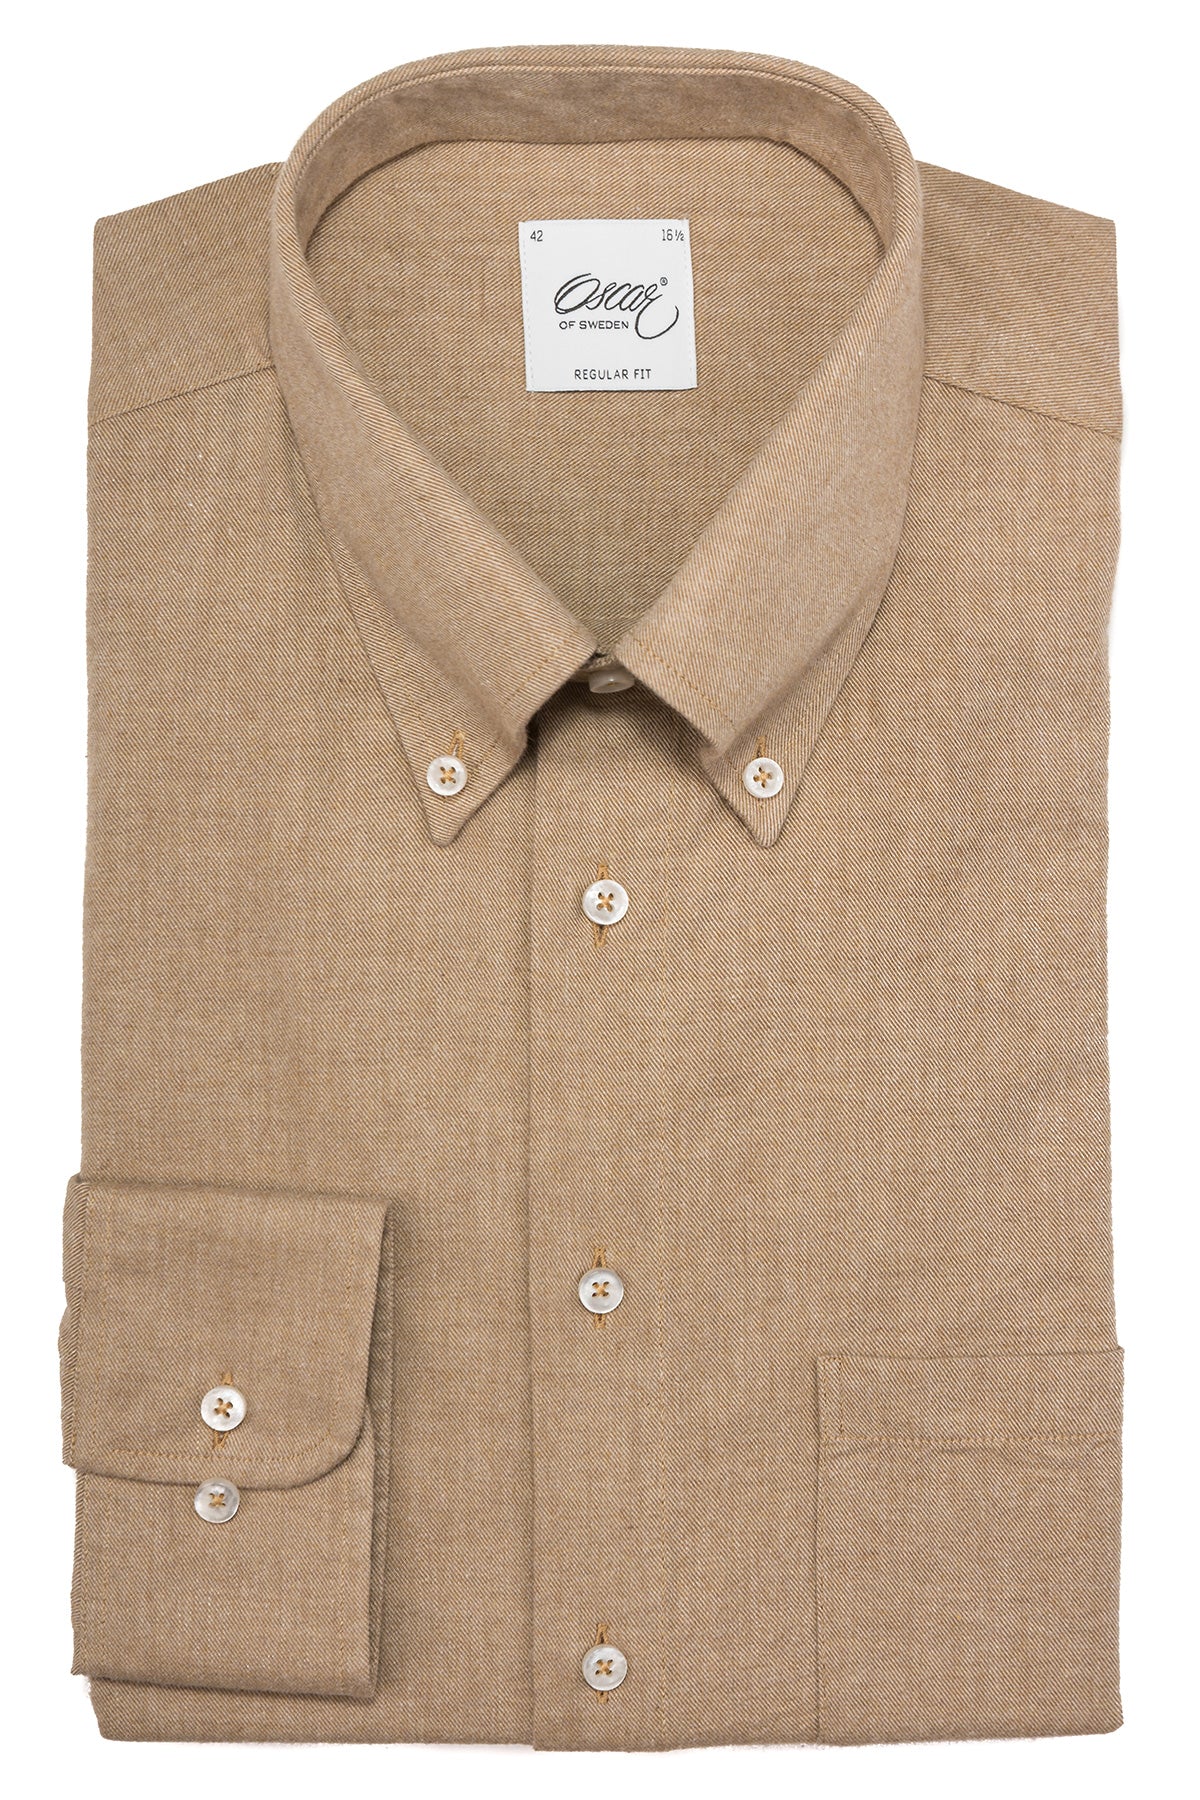 Beige flannel button down regular fit shirt